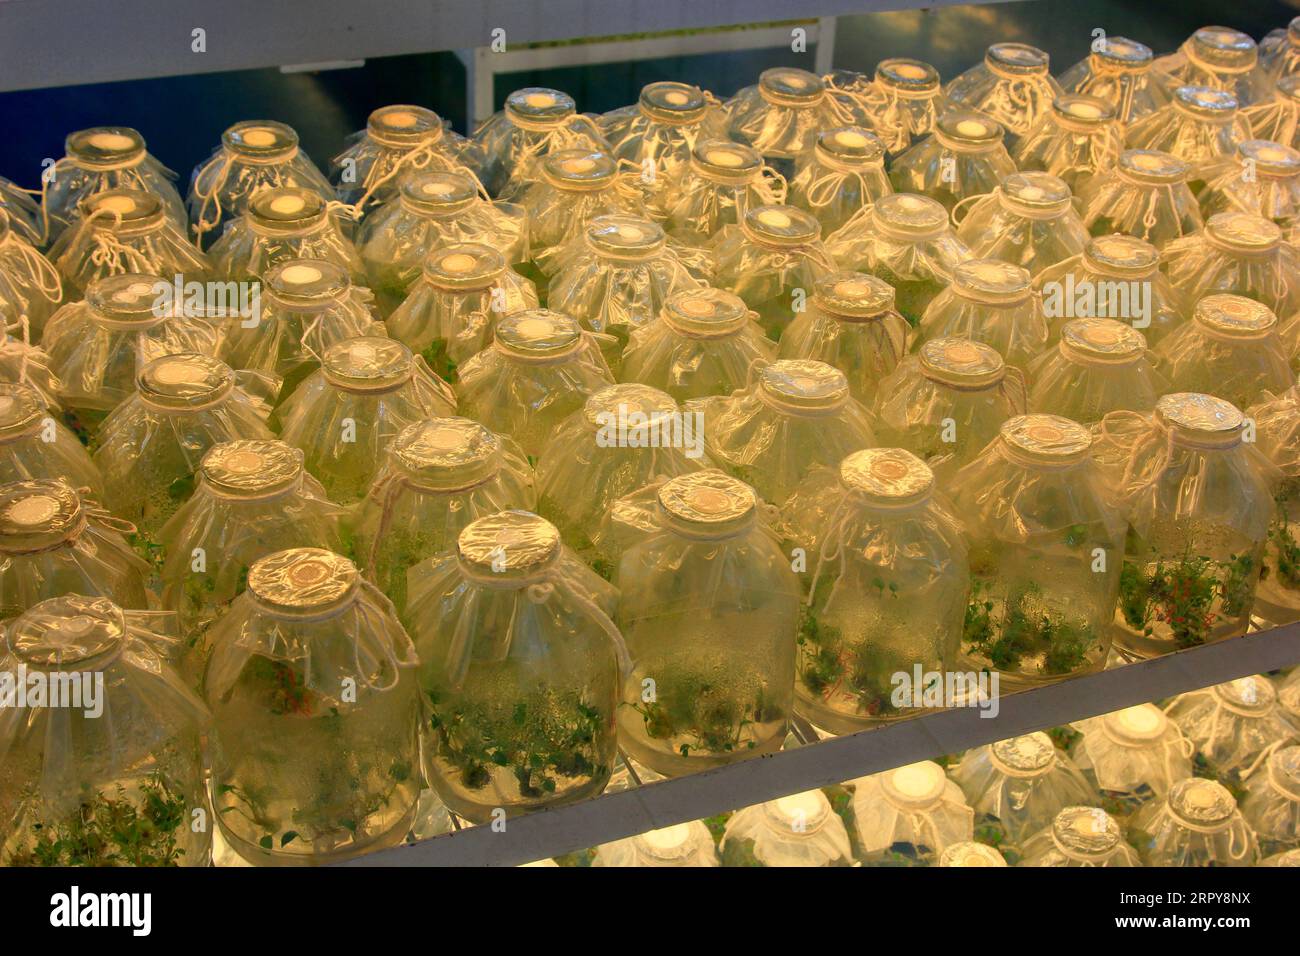 Gewebekulturblumen im Sterilraum, Nahaufnahme des Fotos Stockfoto